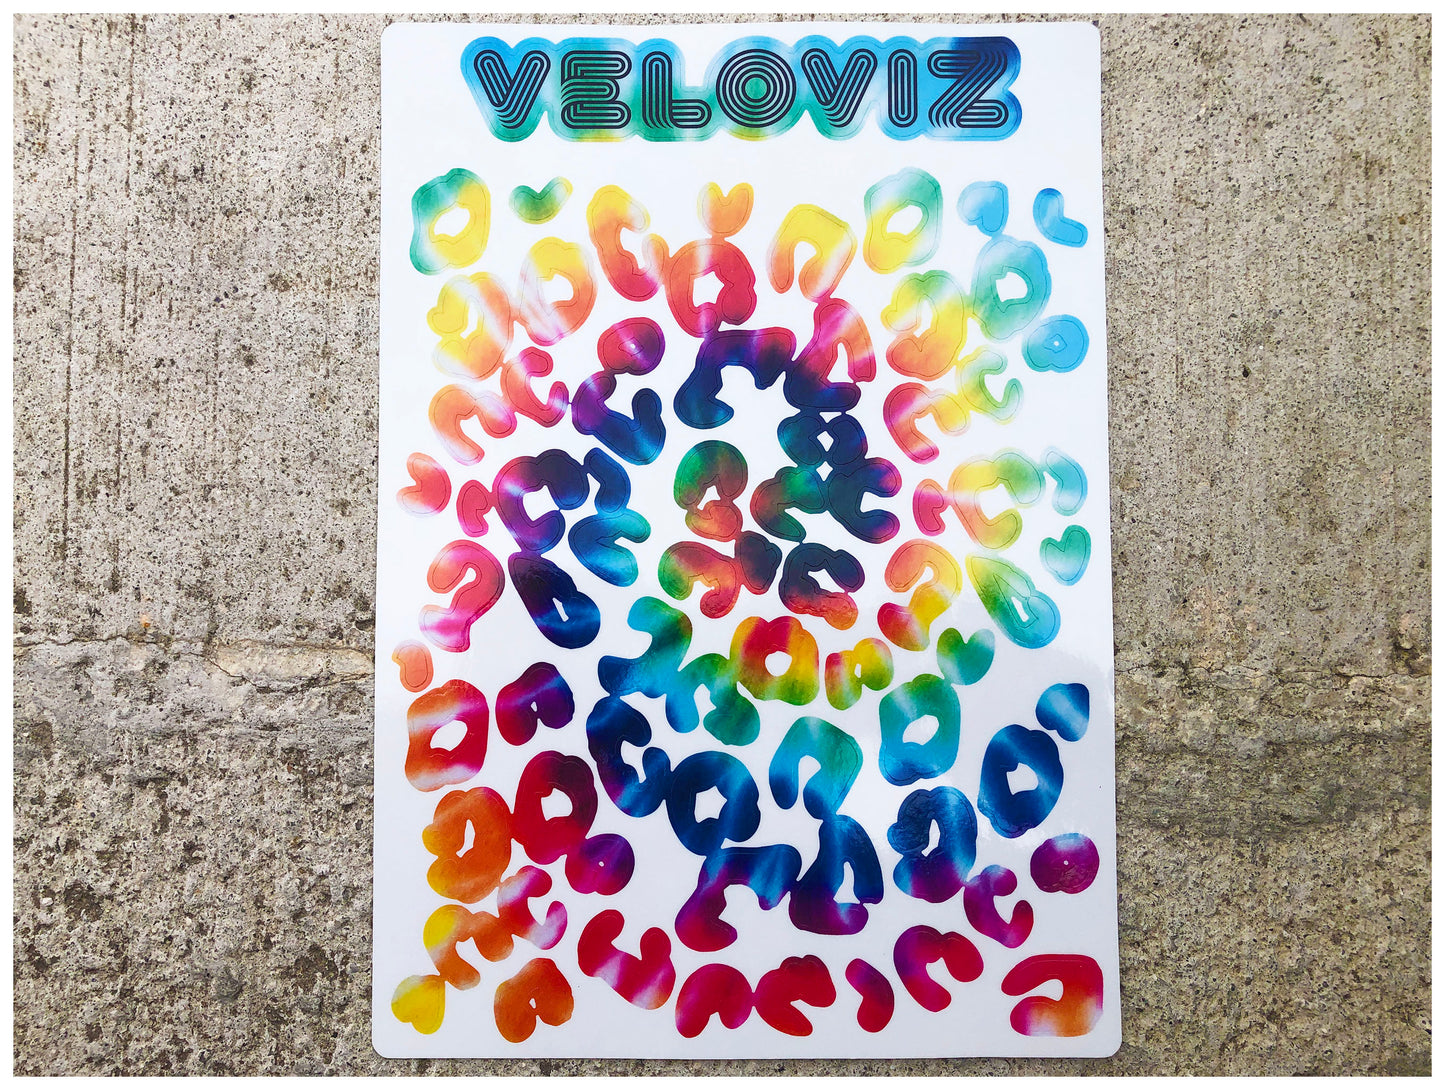 Reflective Leopard Print A4 Cargo Bike Stickers - Tie Dye